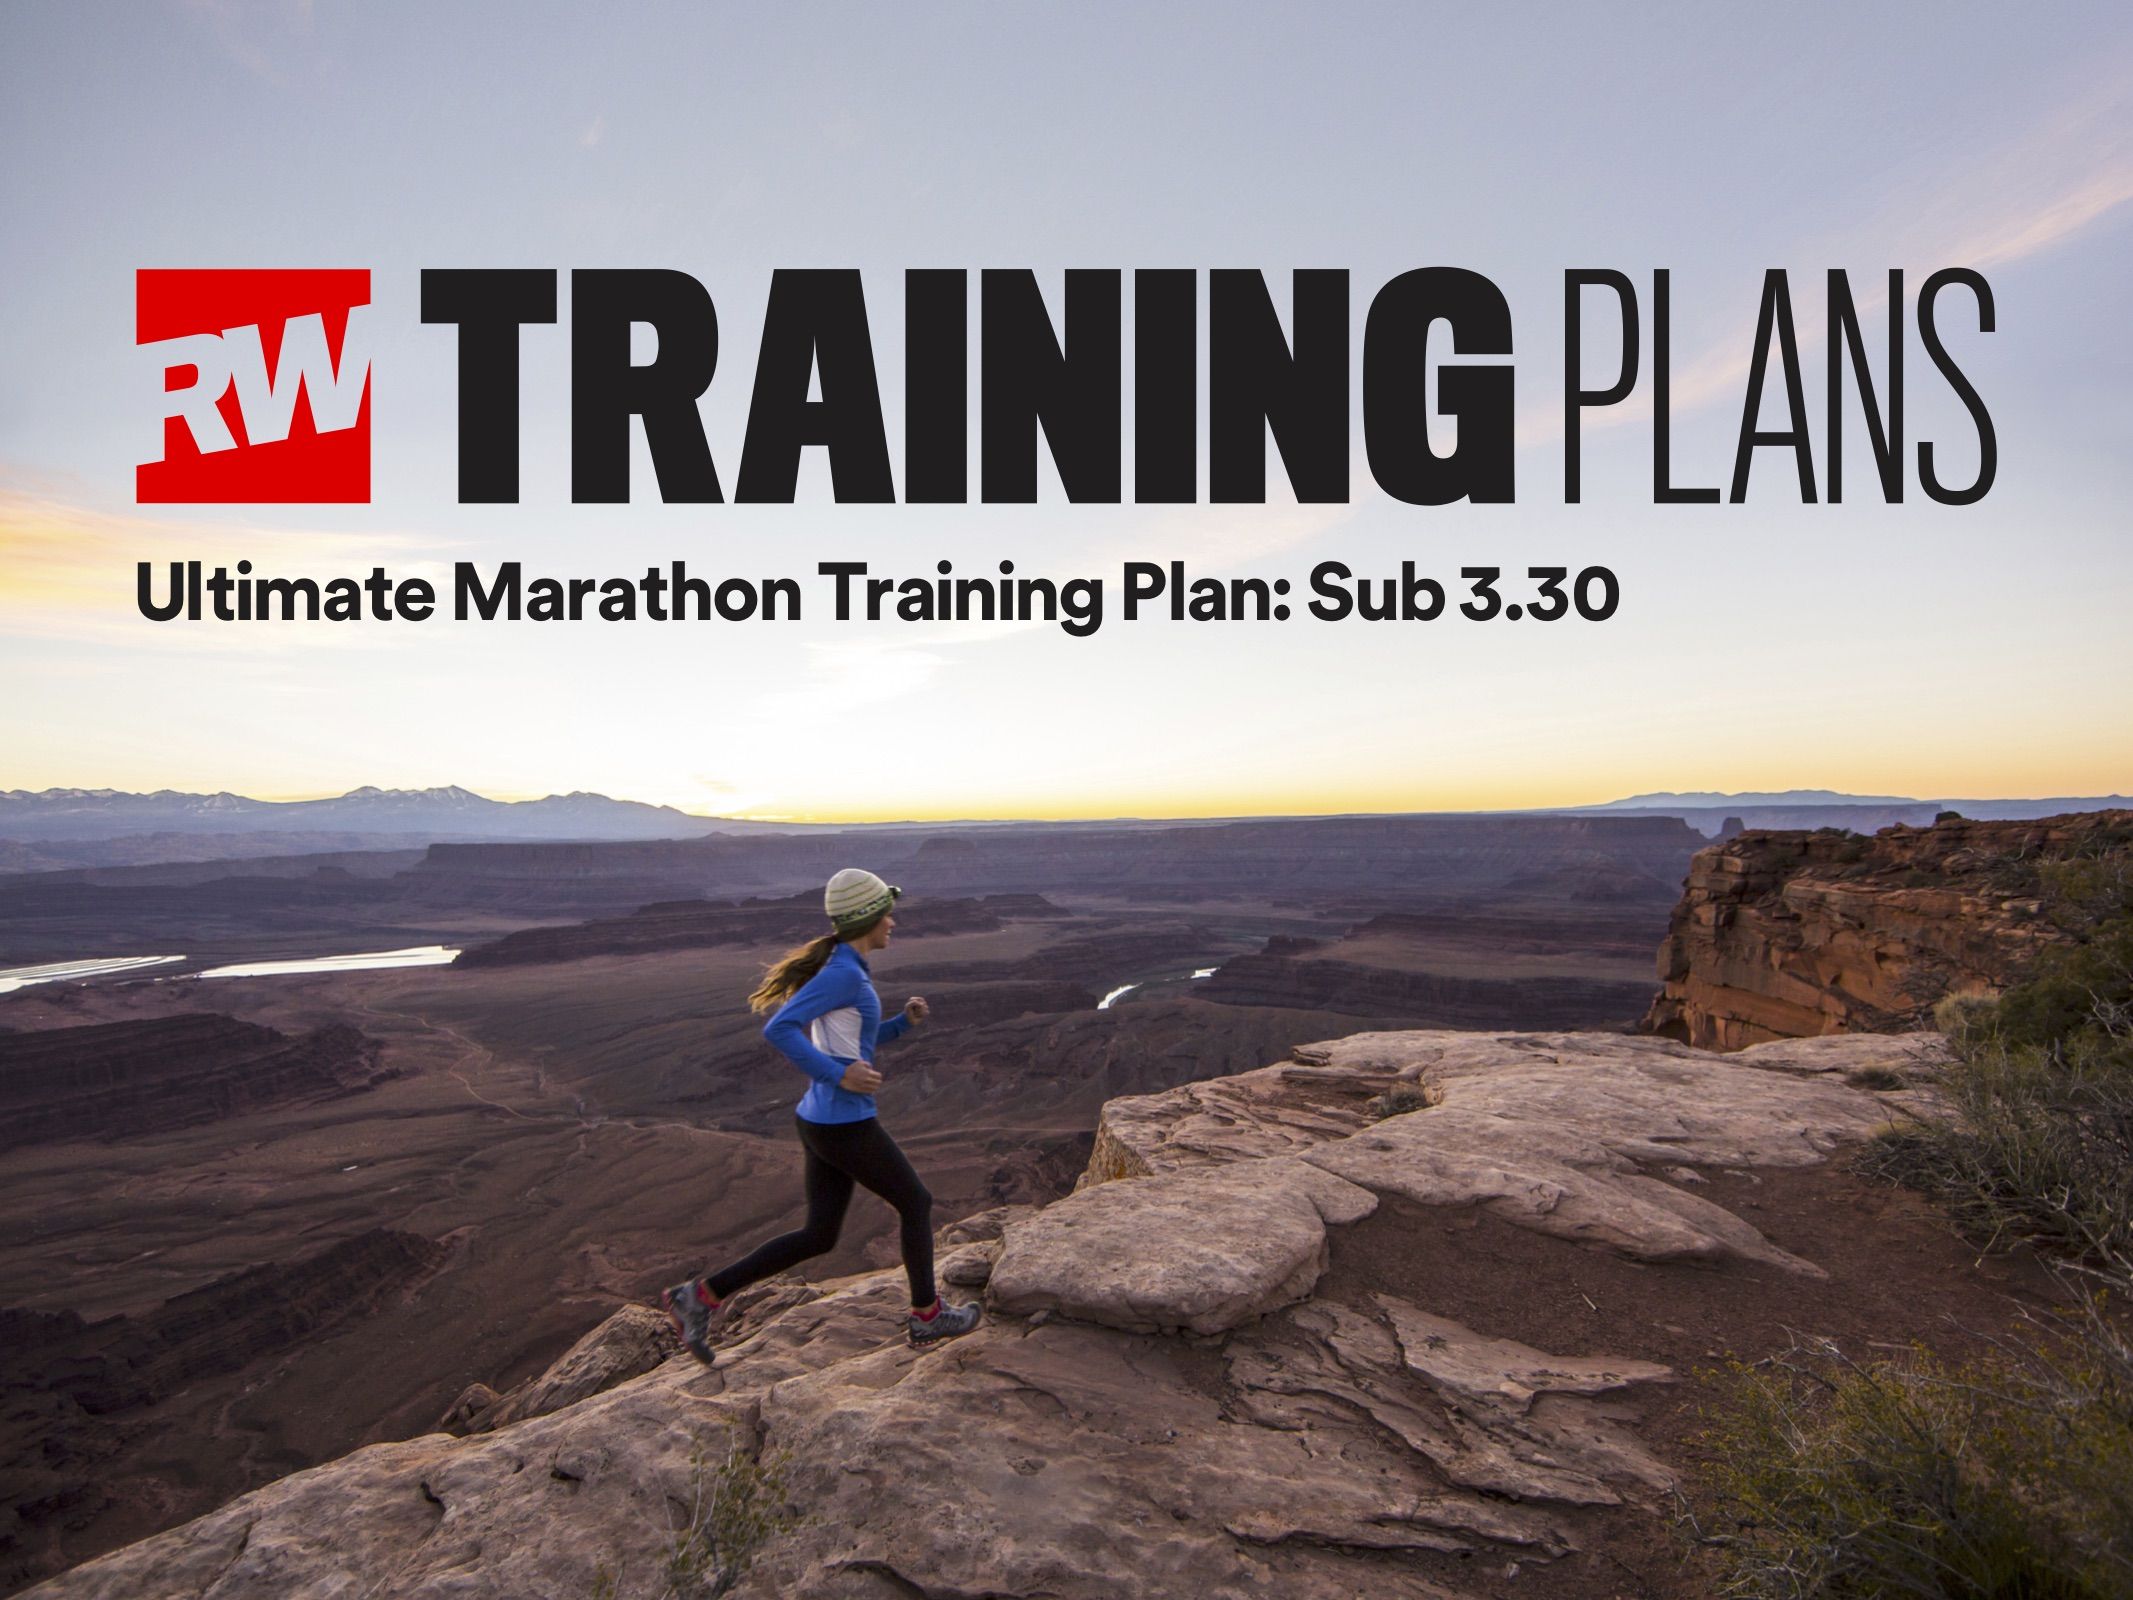 Rw S Ultimate 16 Week Marathon Training Plan For Runners Looking To Run Sub 3 30